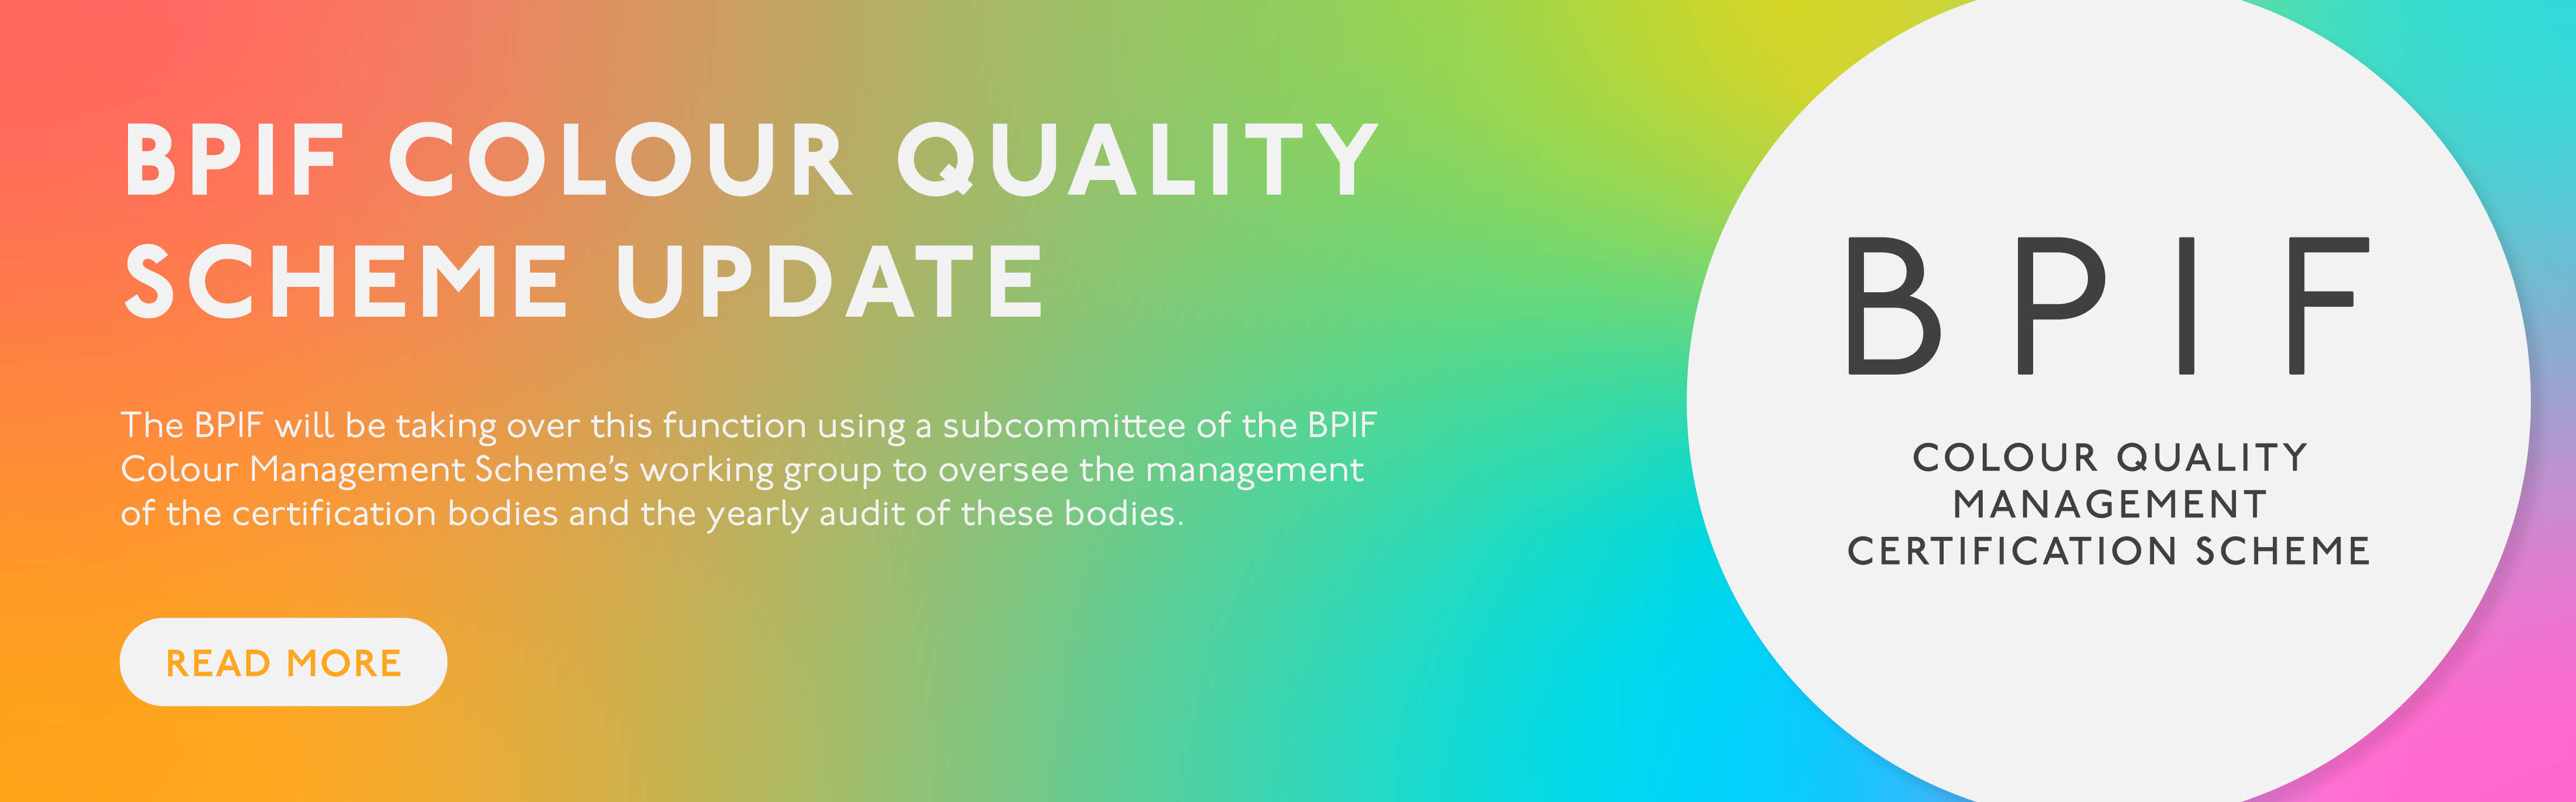 BPIF Colour Quality Management Scheme update